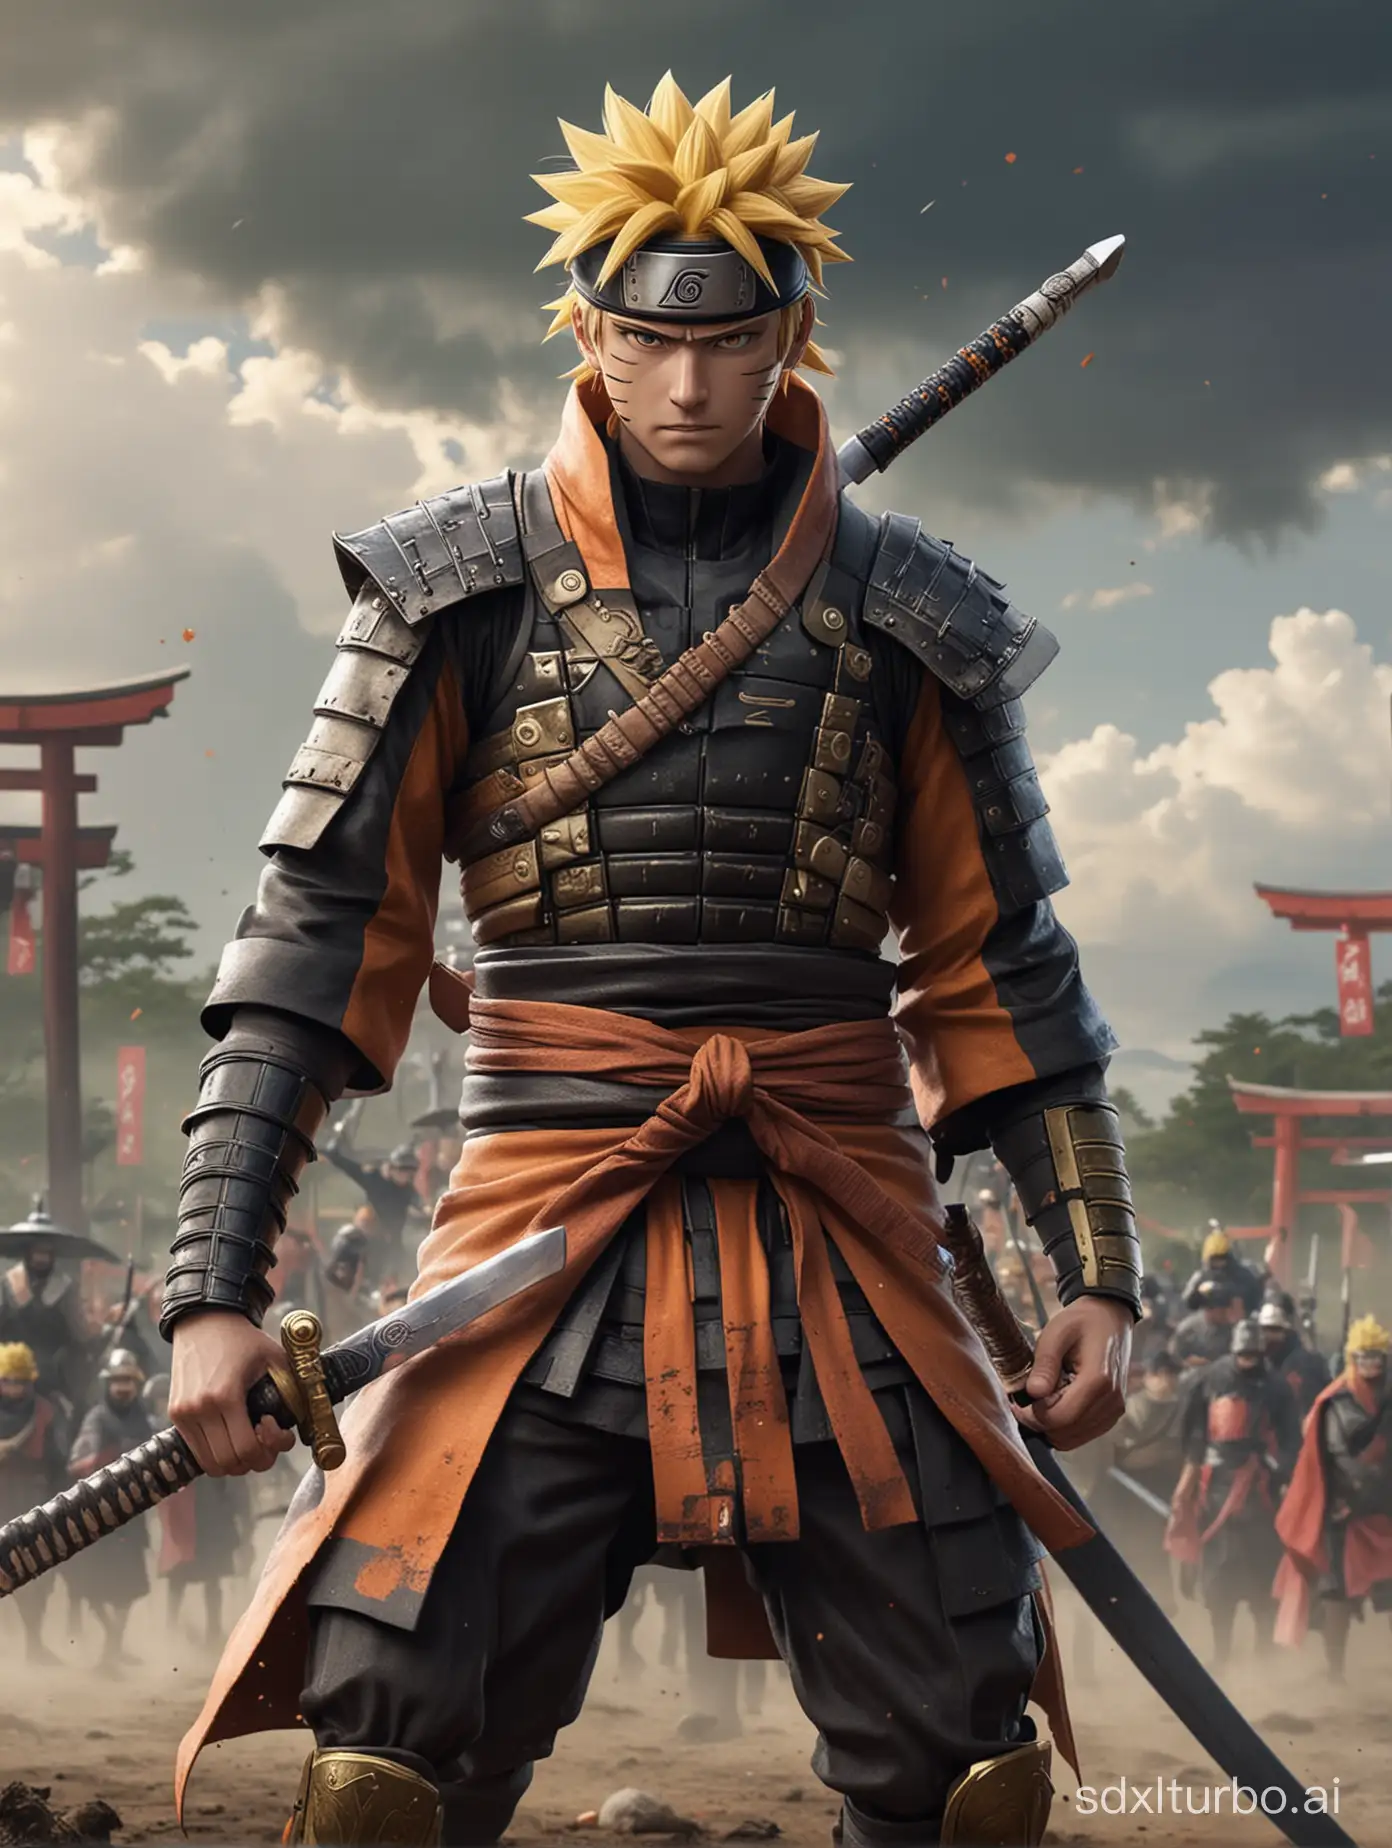 Naruto-Samurai-Ancient-Japanese-Warrior-with-Katana-on-Battlefield